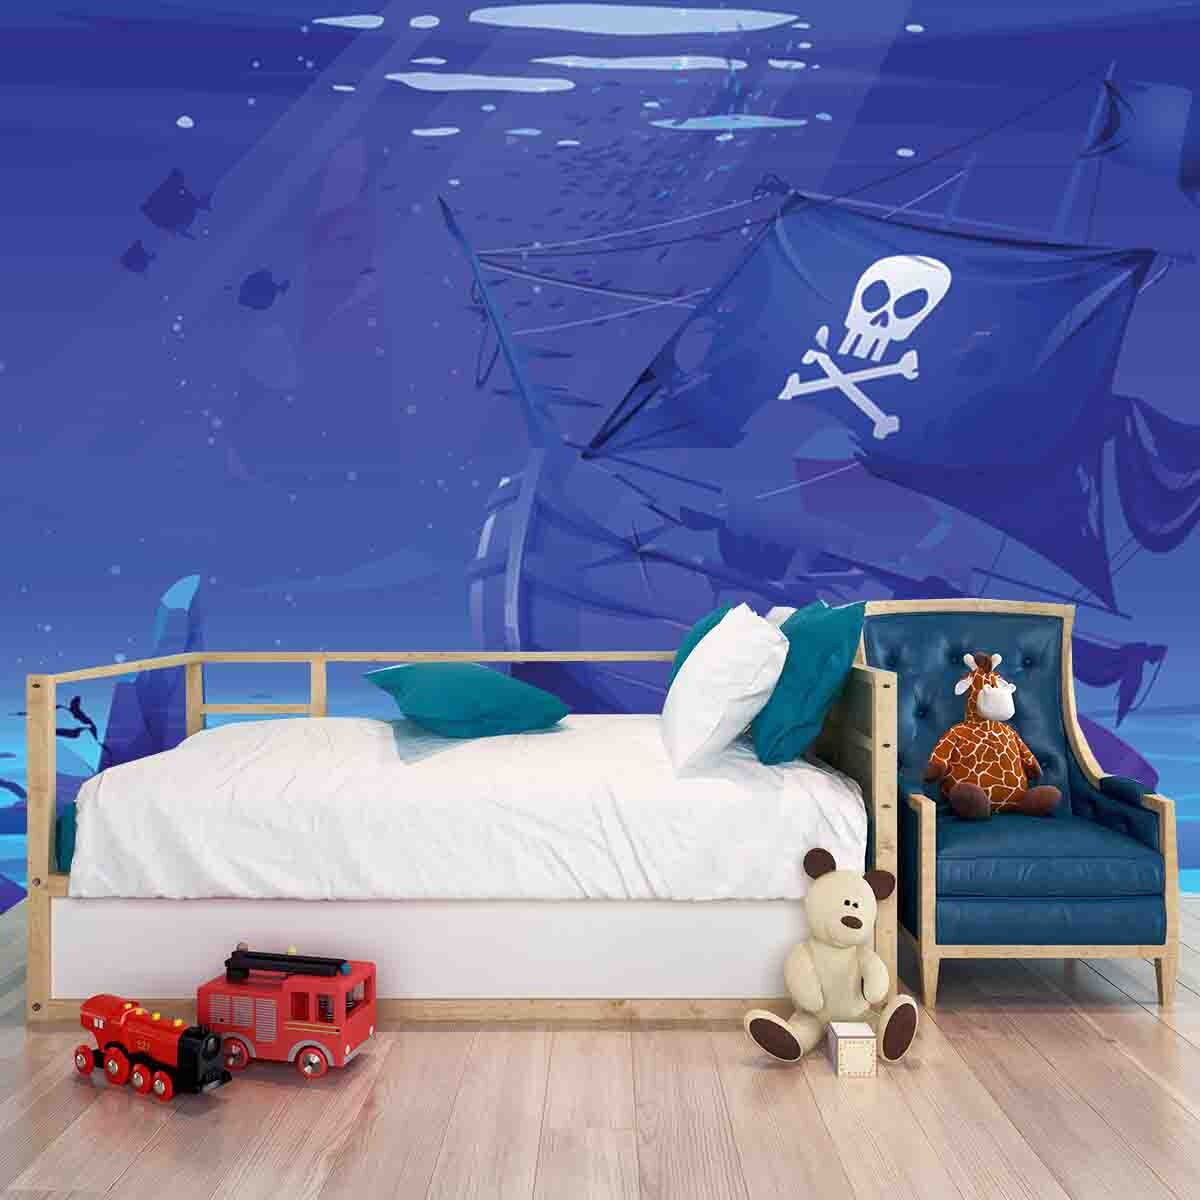 Underwater Sunken Pirate Ship with Jolly Roger Flag Wallpaper Little Boy Bedroom Mural